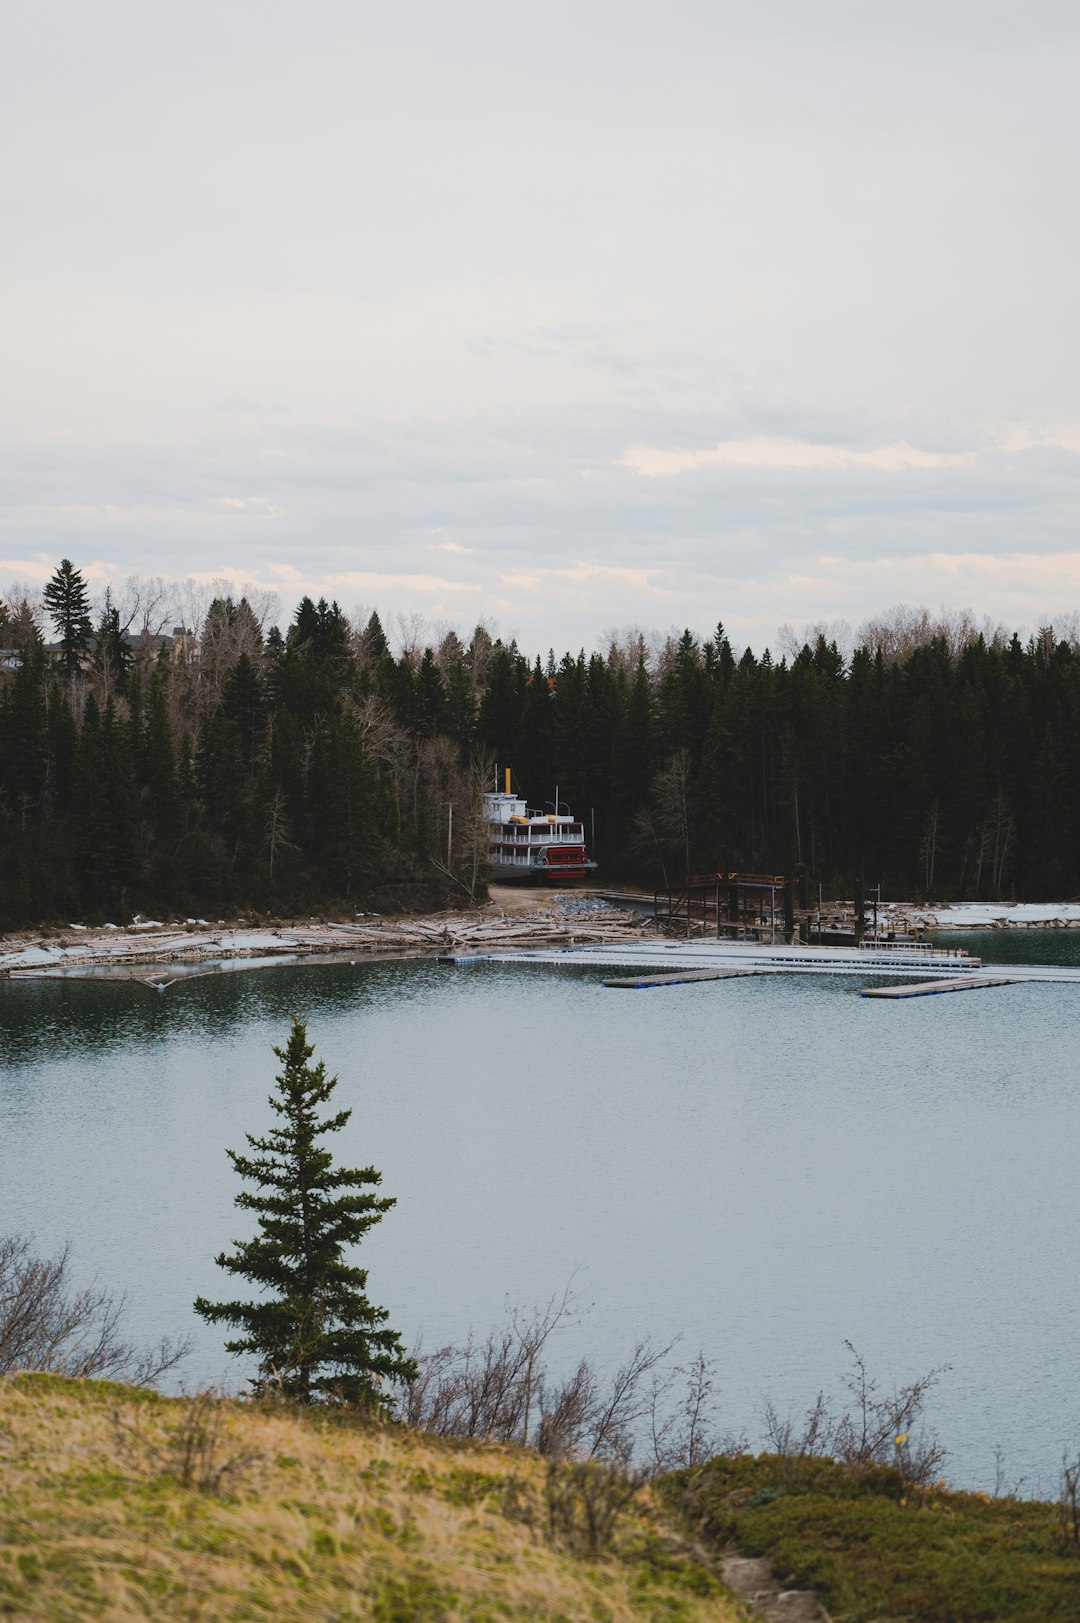 white boat on lake near trees during daytime